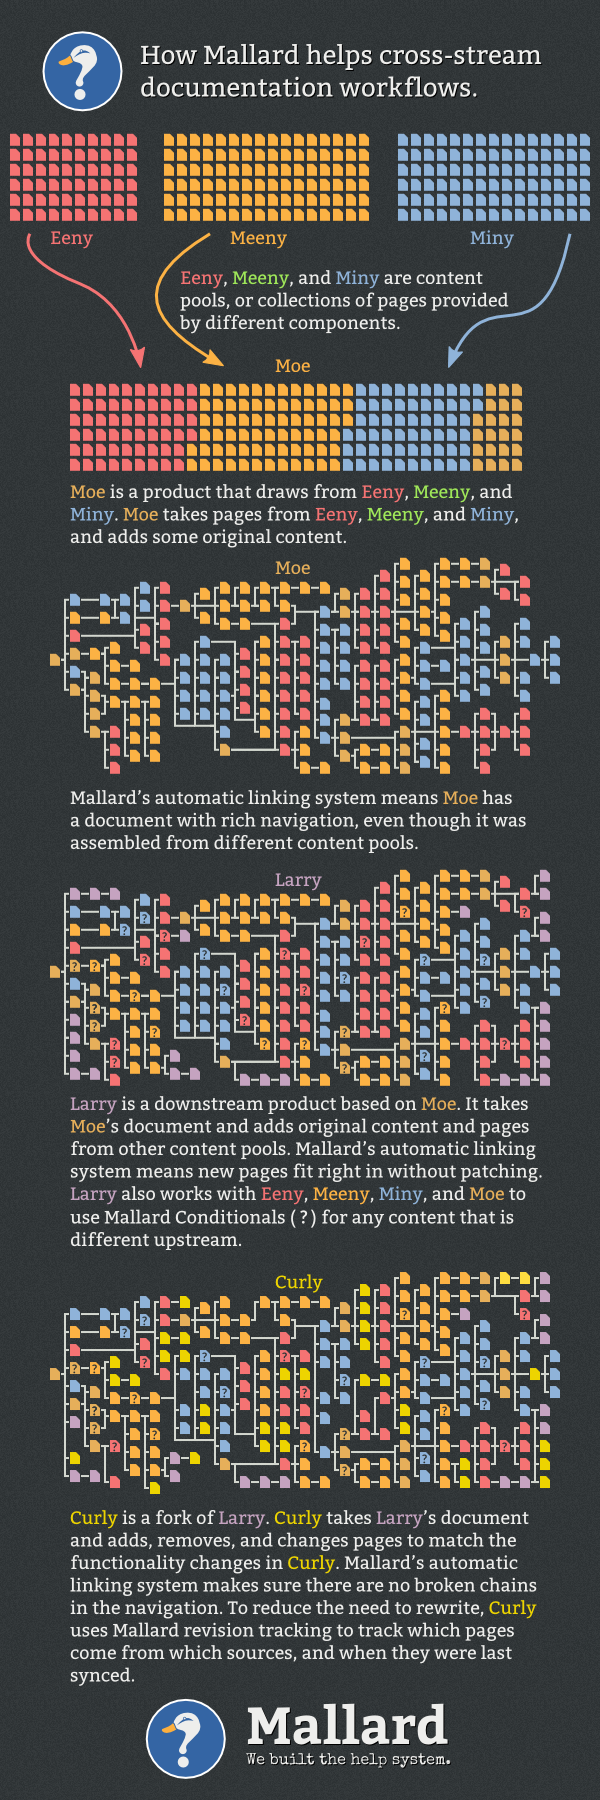 Infographic: How Mallard helps cross-stream documentation workflows